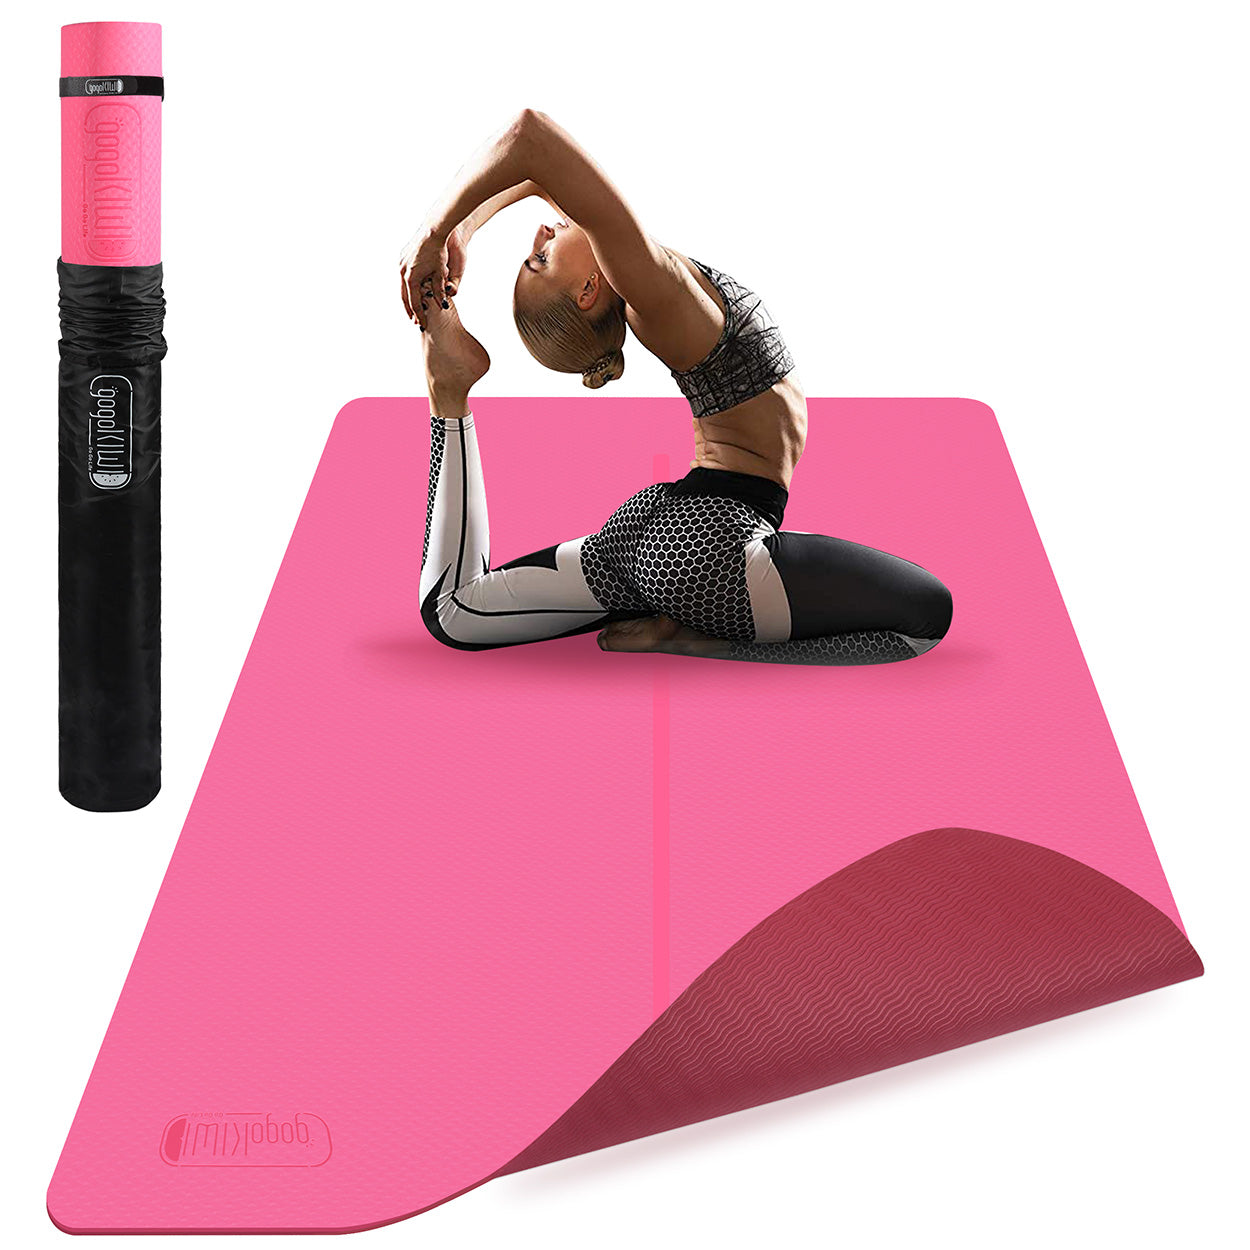 Gogokiwi Large Yoga Mat (6'x4') Extra Wide 1/4 Thick Workout Grey Shadows